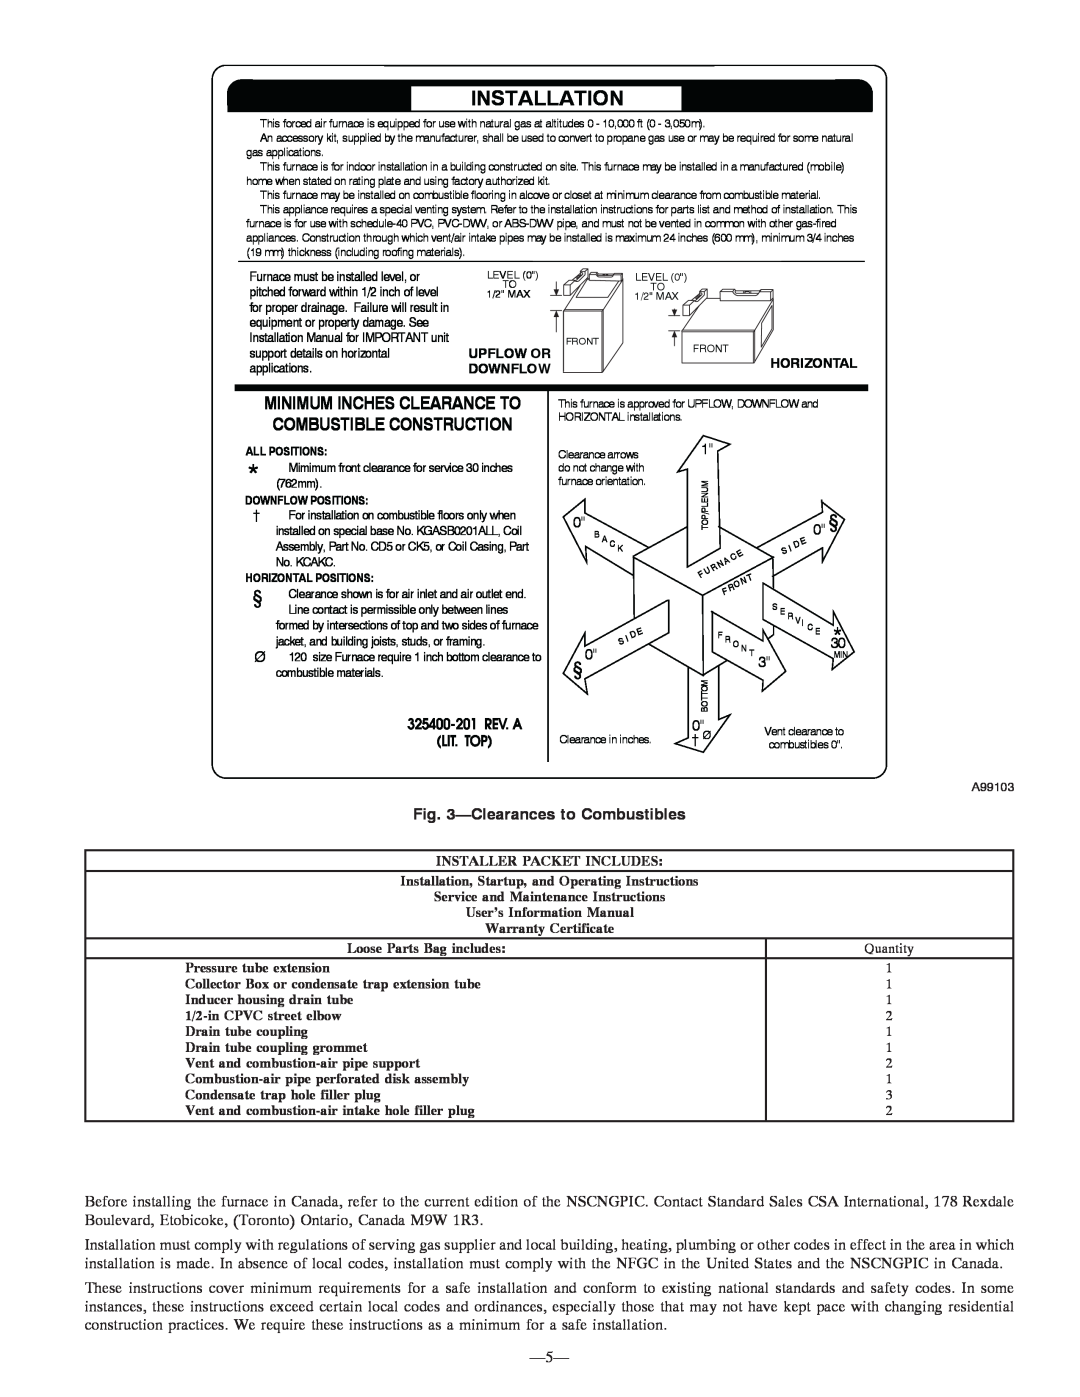 Bryant 355MAV instruction manual Clearancesto Combustibles, Installation 